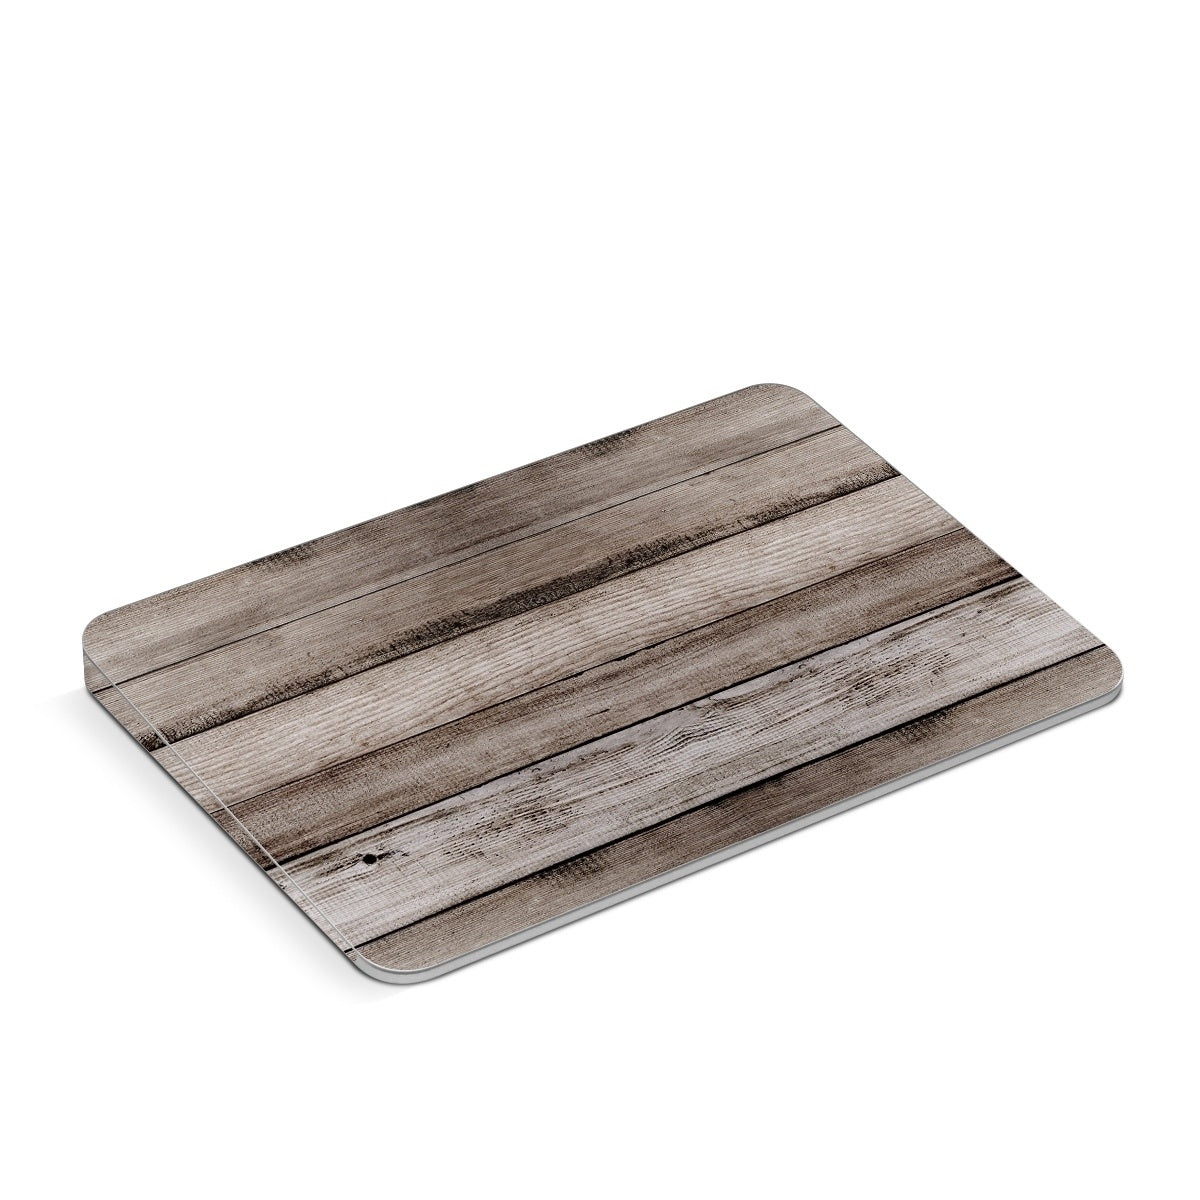 Barn Wood - Apple Magic Trackpad Skin - Reclaimed Woods - DecalGirl